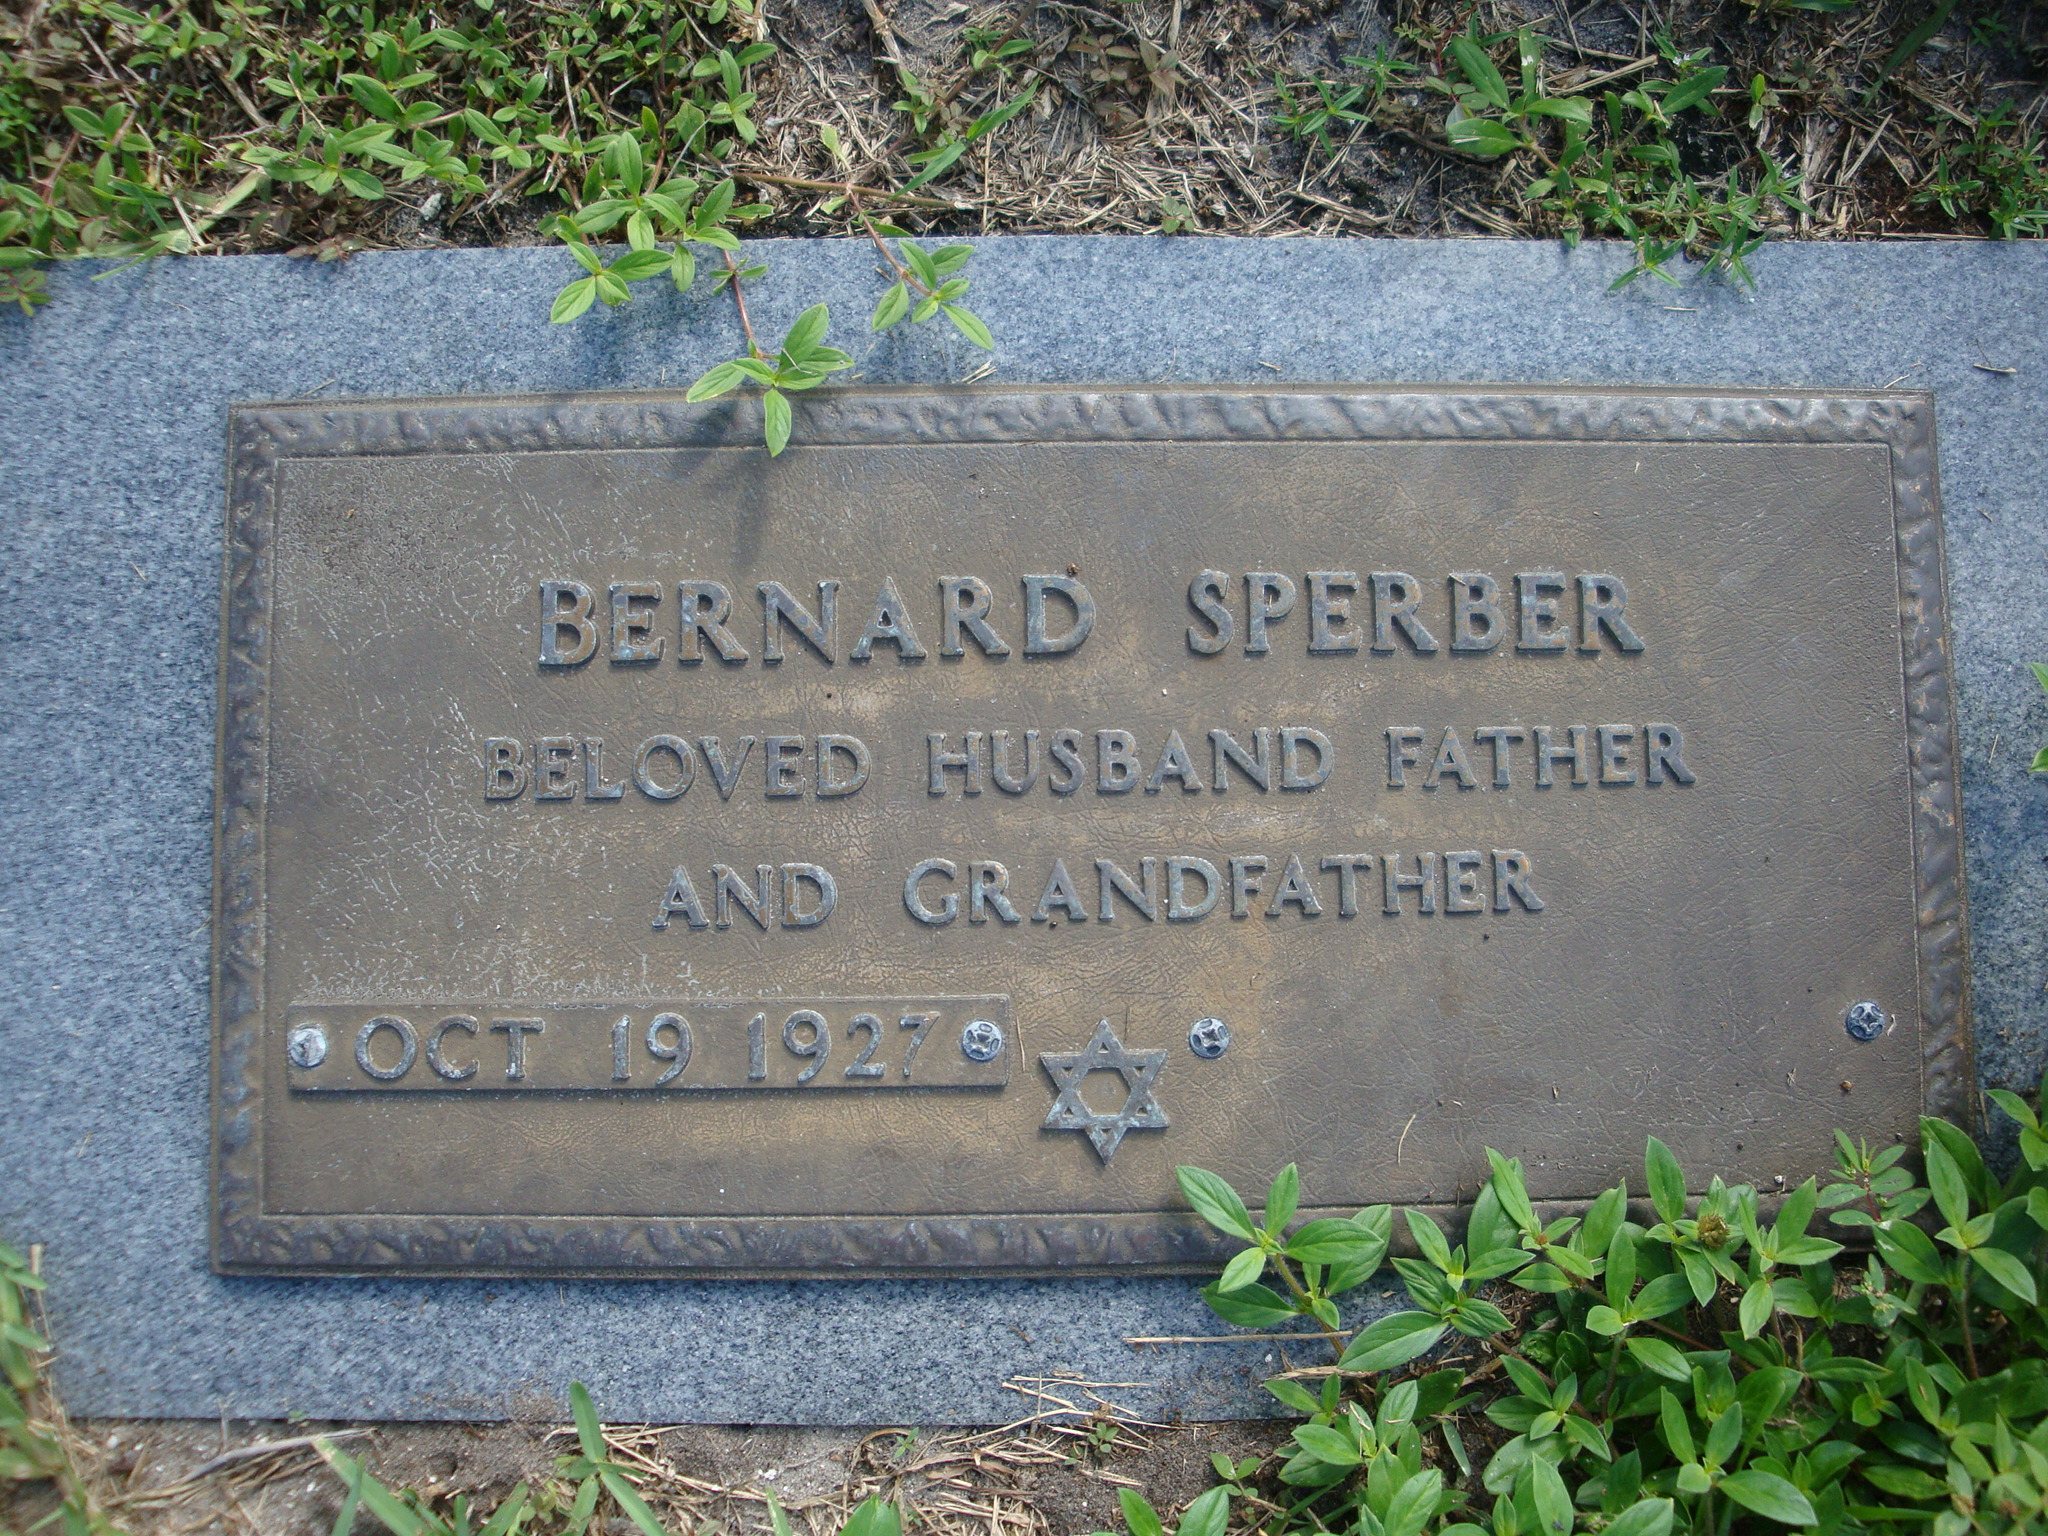 Bernard Sperber